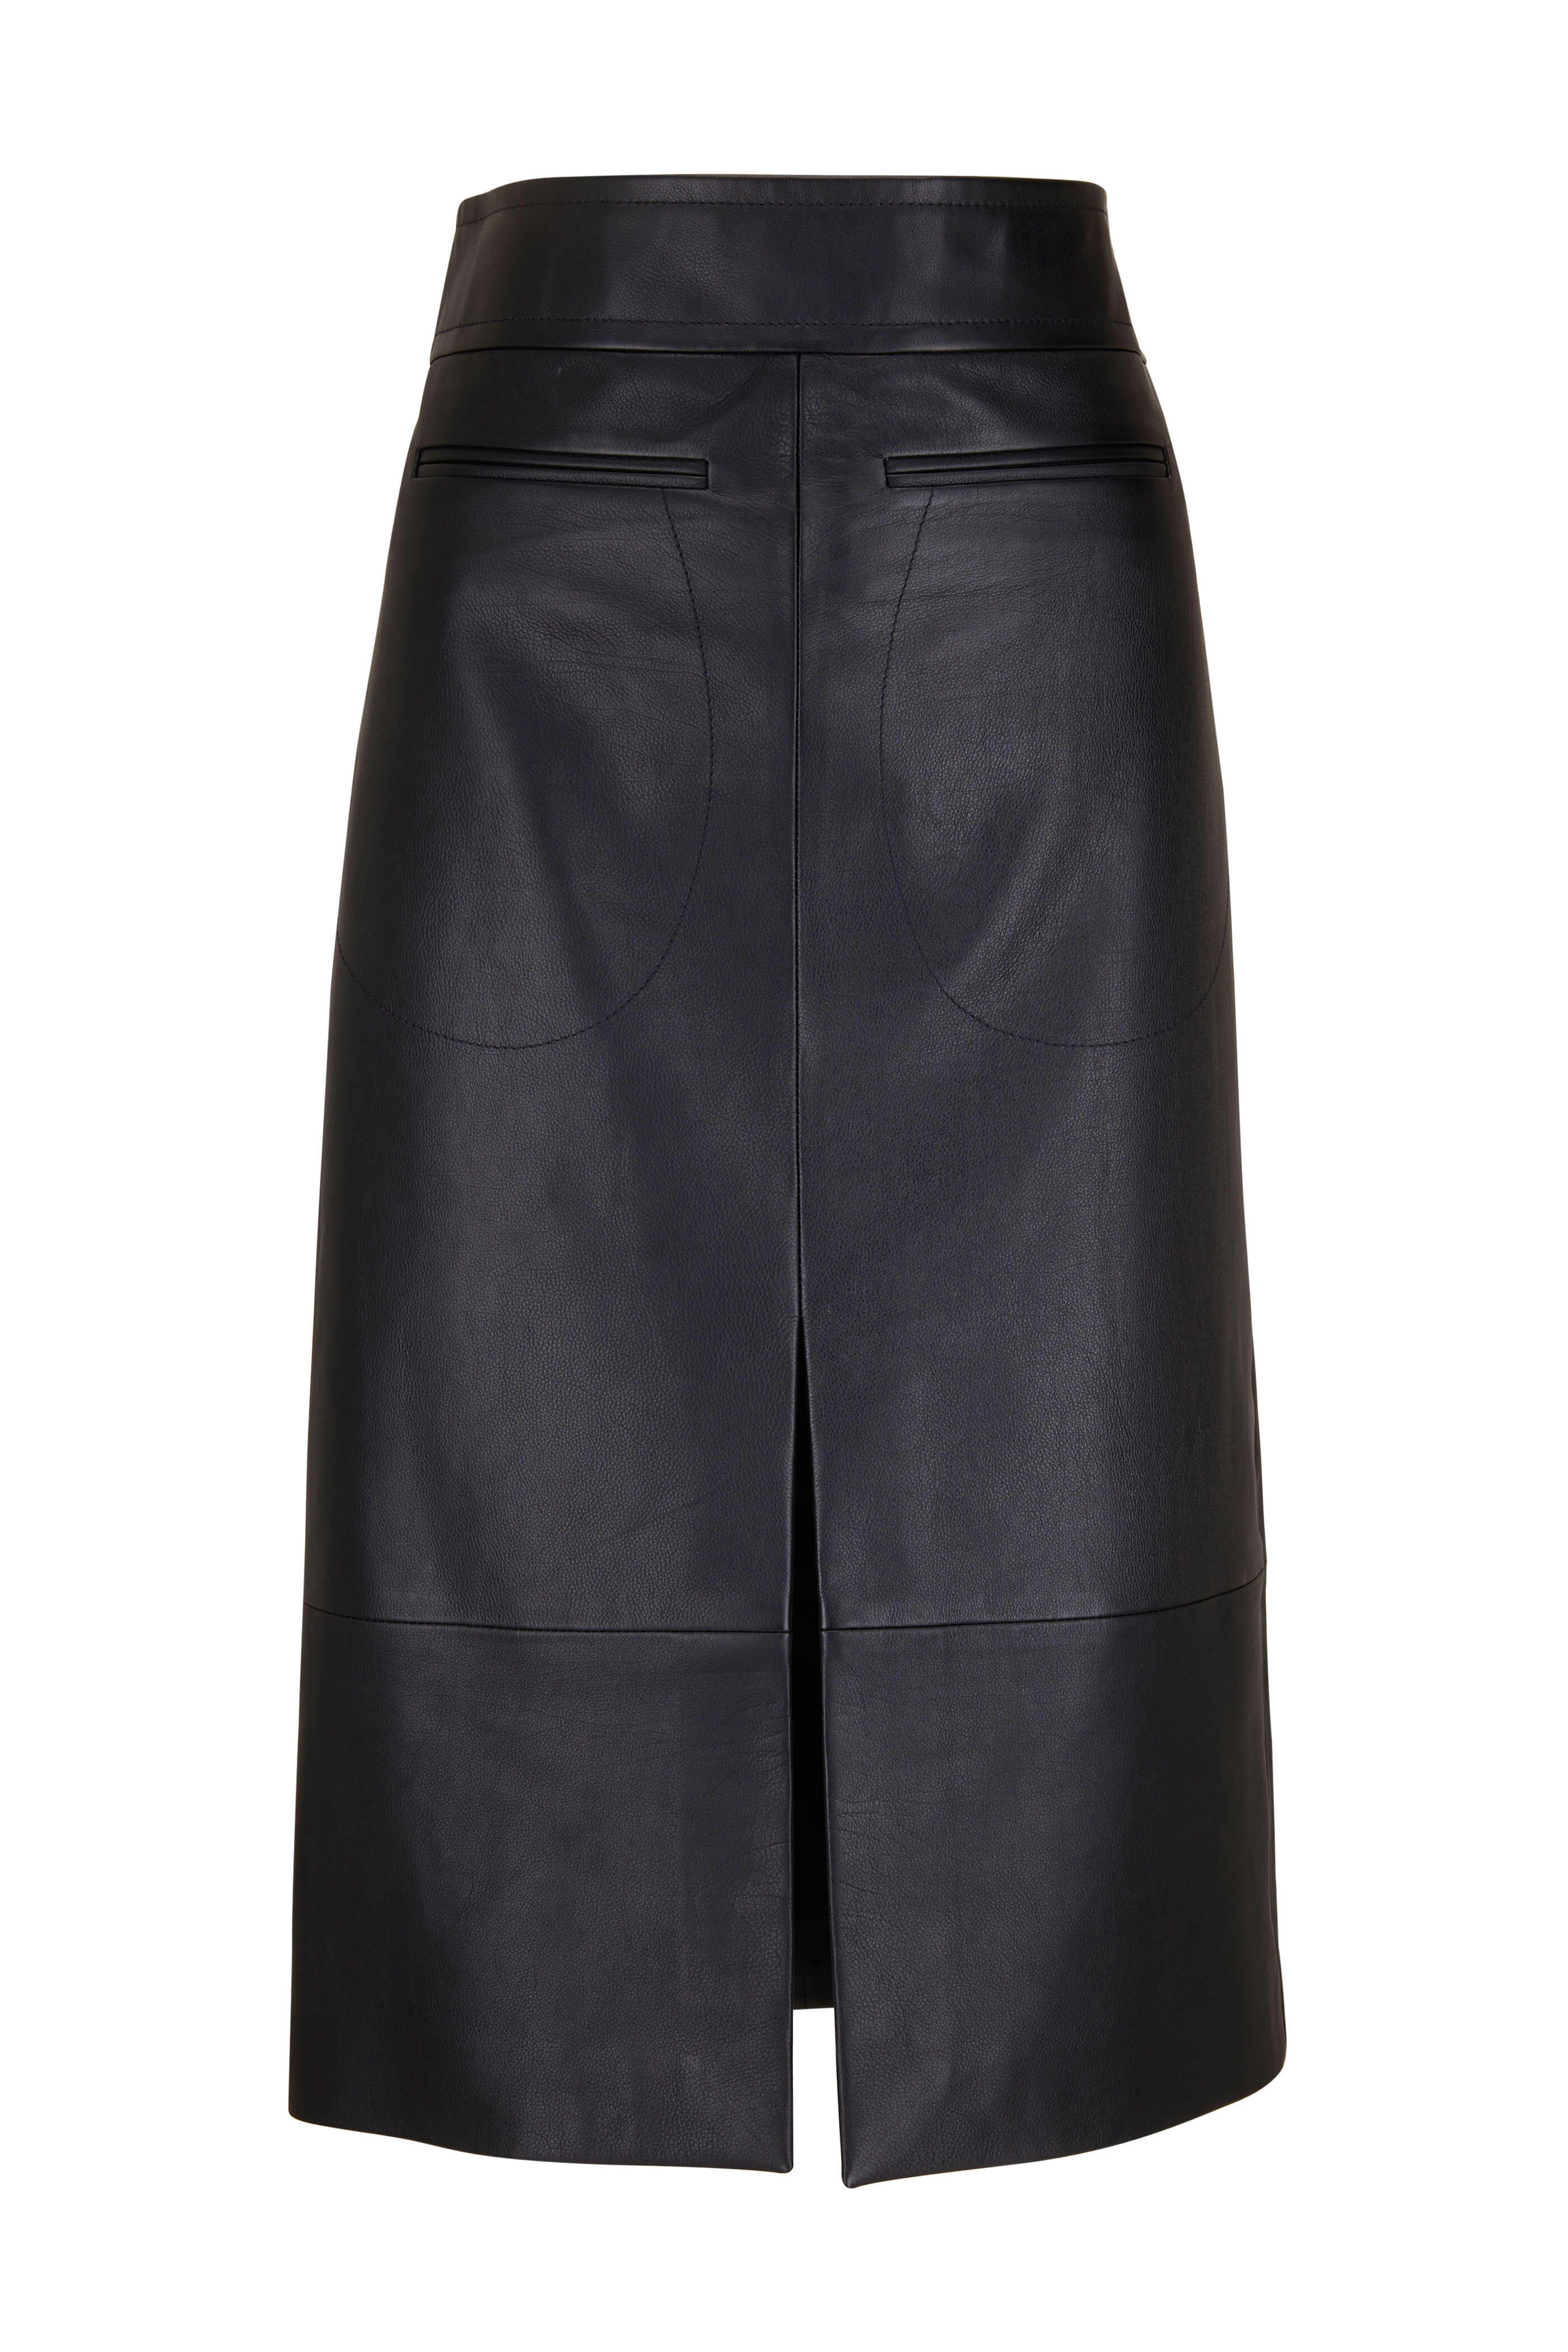 Khaite - Freya Black Leather Pencil Skirt | Mitchell Stores